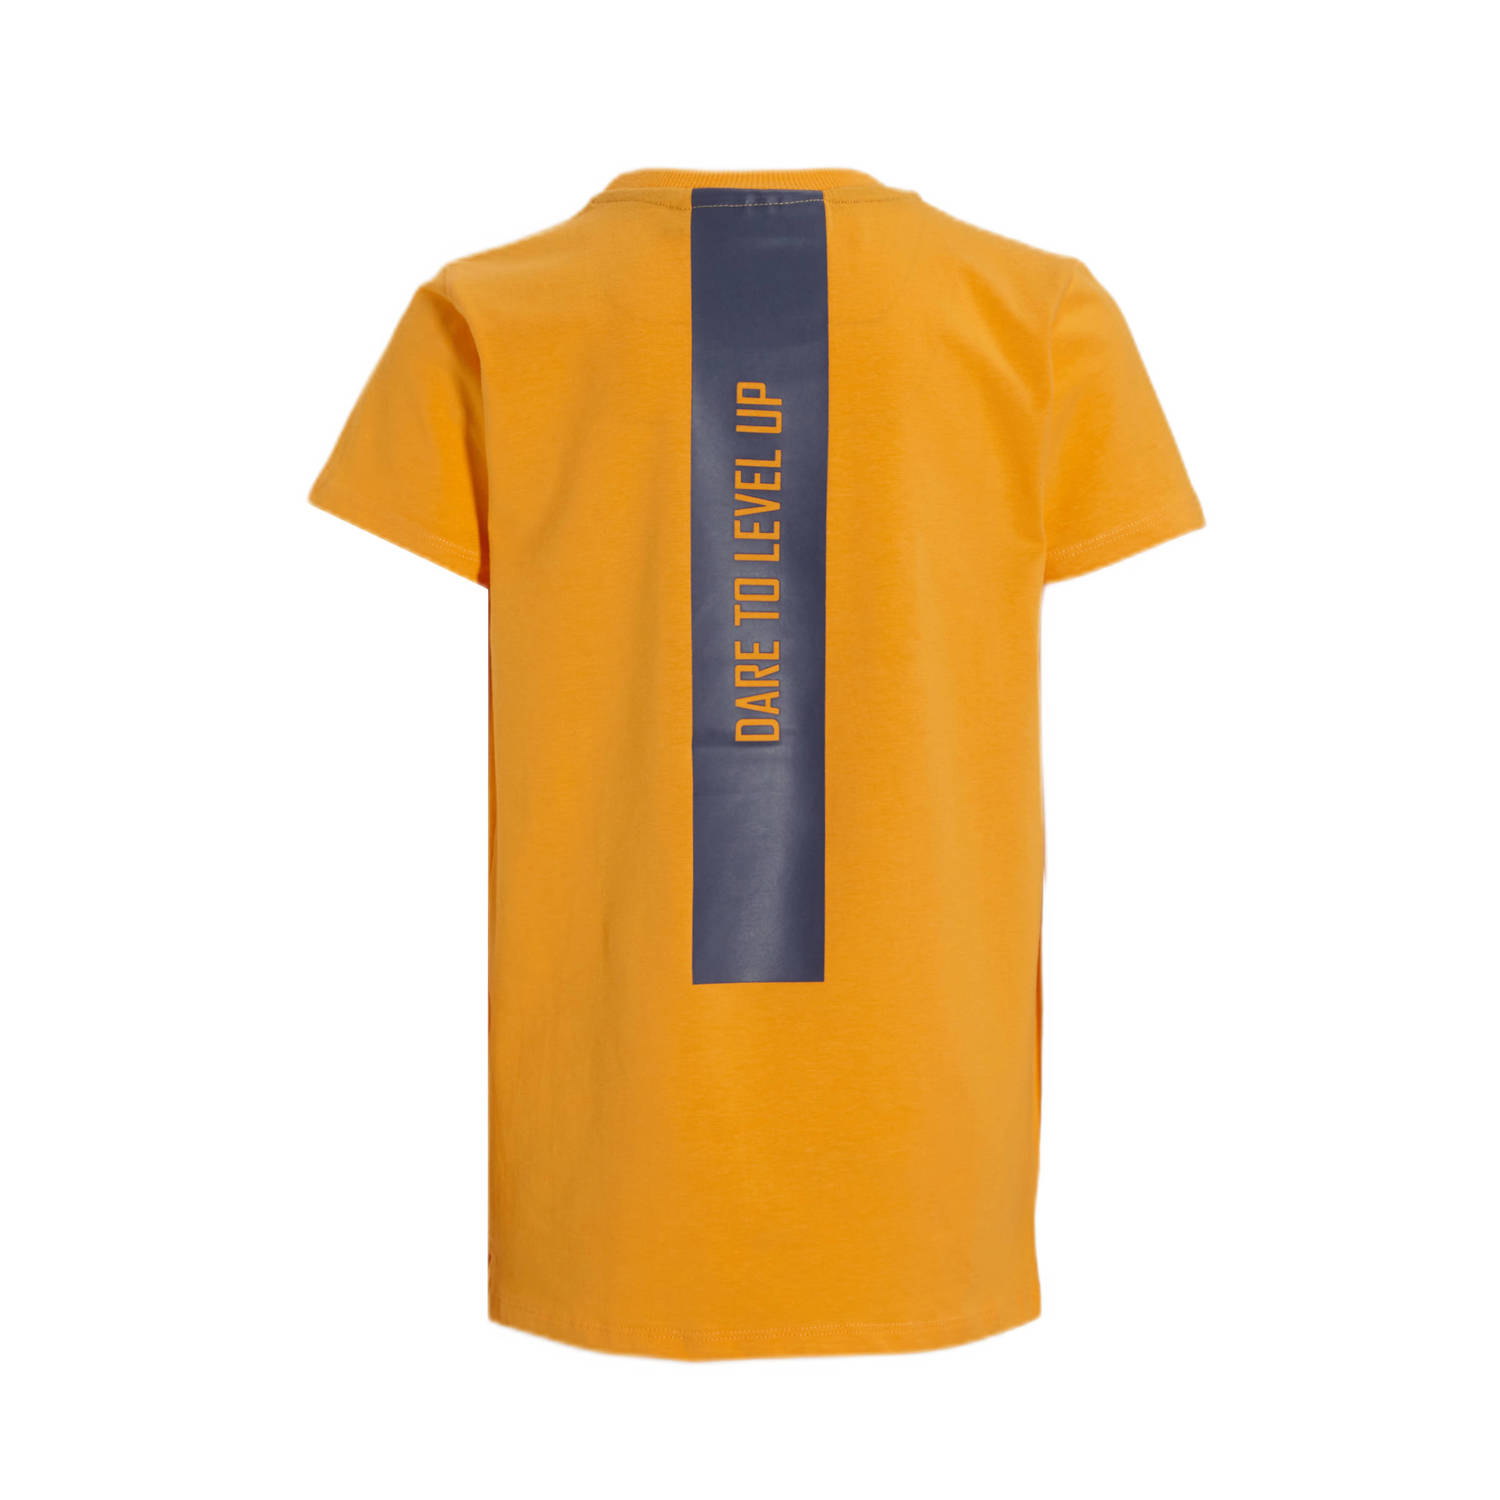 Orange Stars T-shirt Preston met printopdruk geel